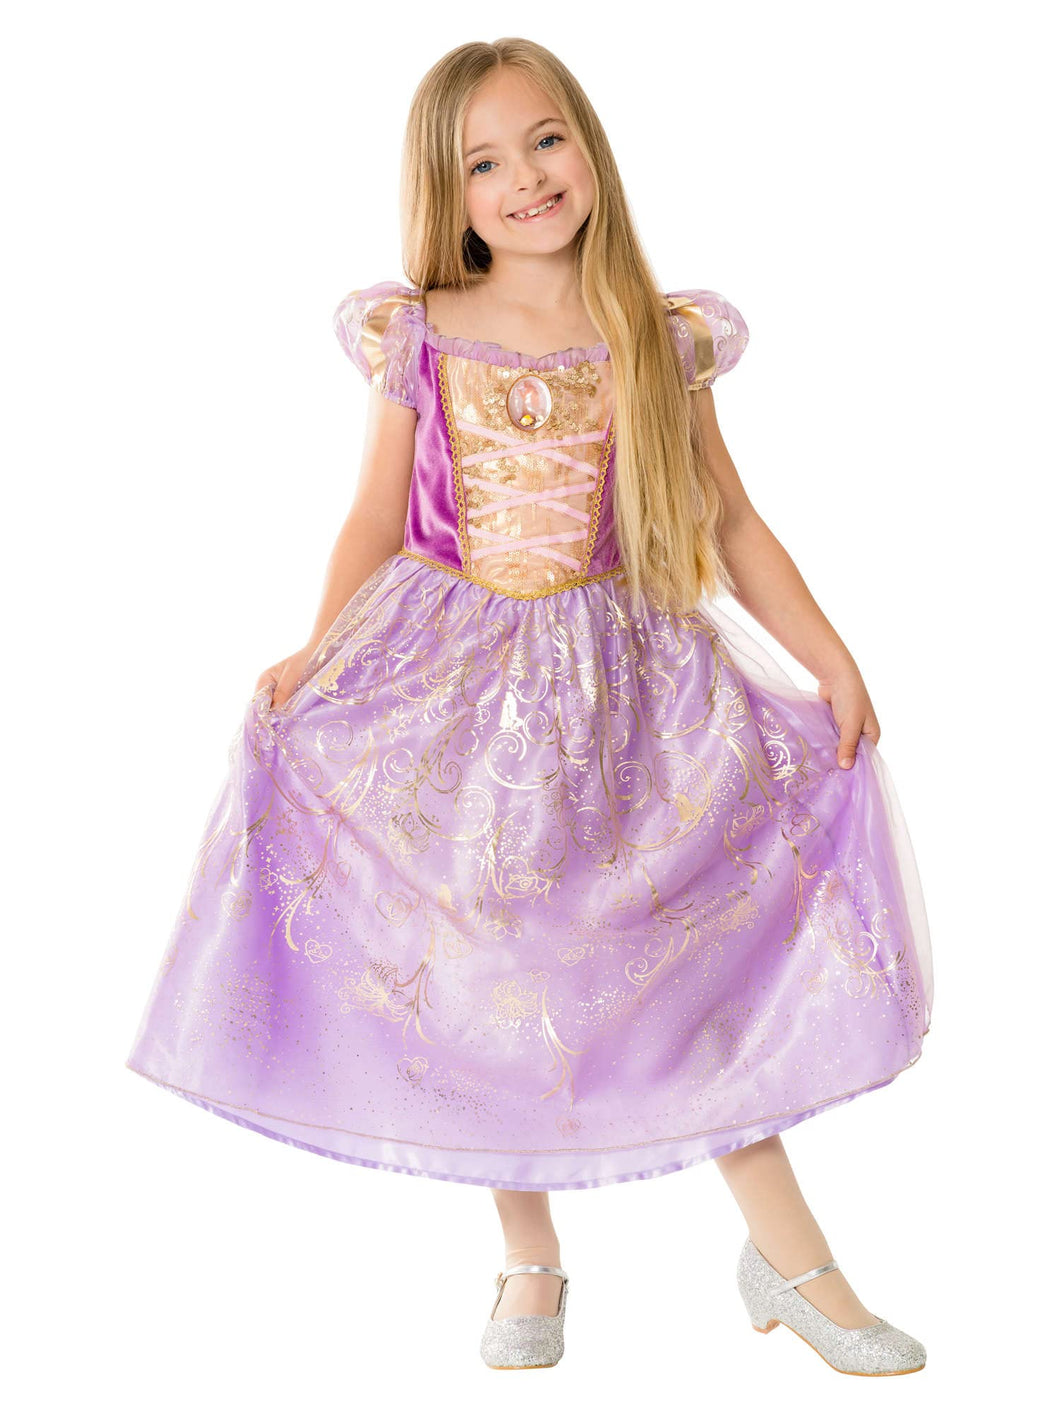 Rubie's 3011173-4 Official Disney Ultimate Princess Deluxe Rapunzel Girls Costume, Kids Fancy Dress Kostm, Multicoloured, S